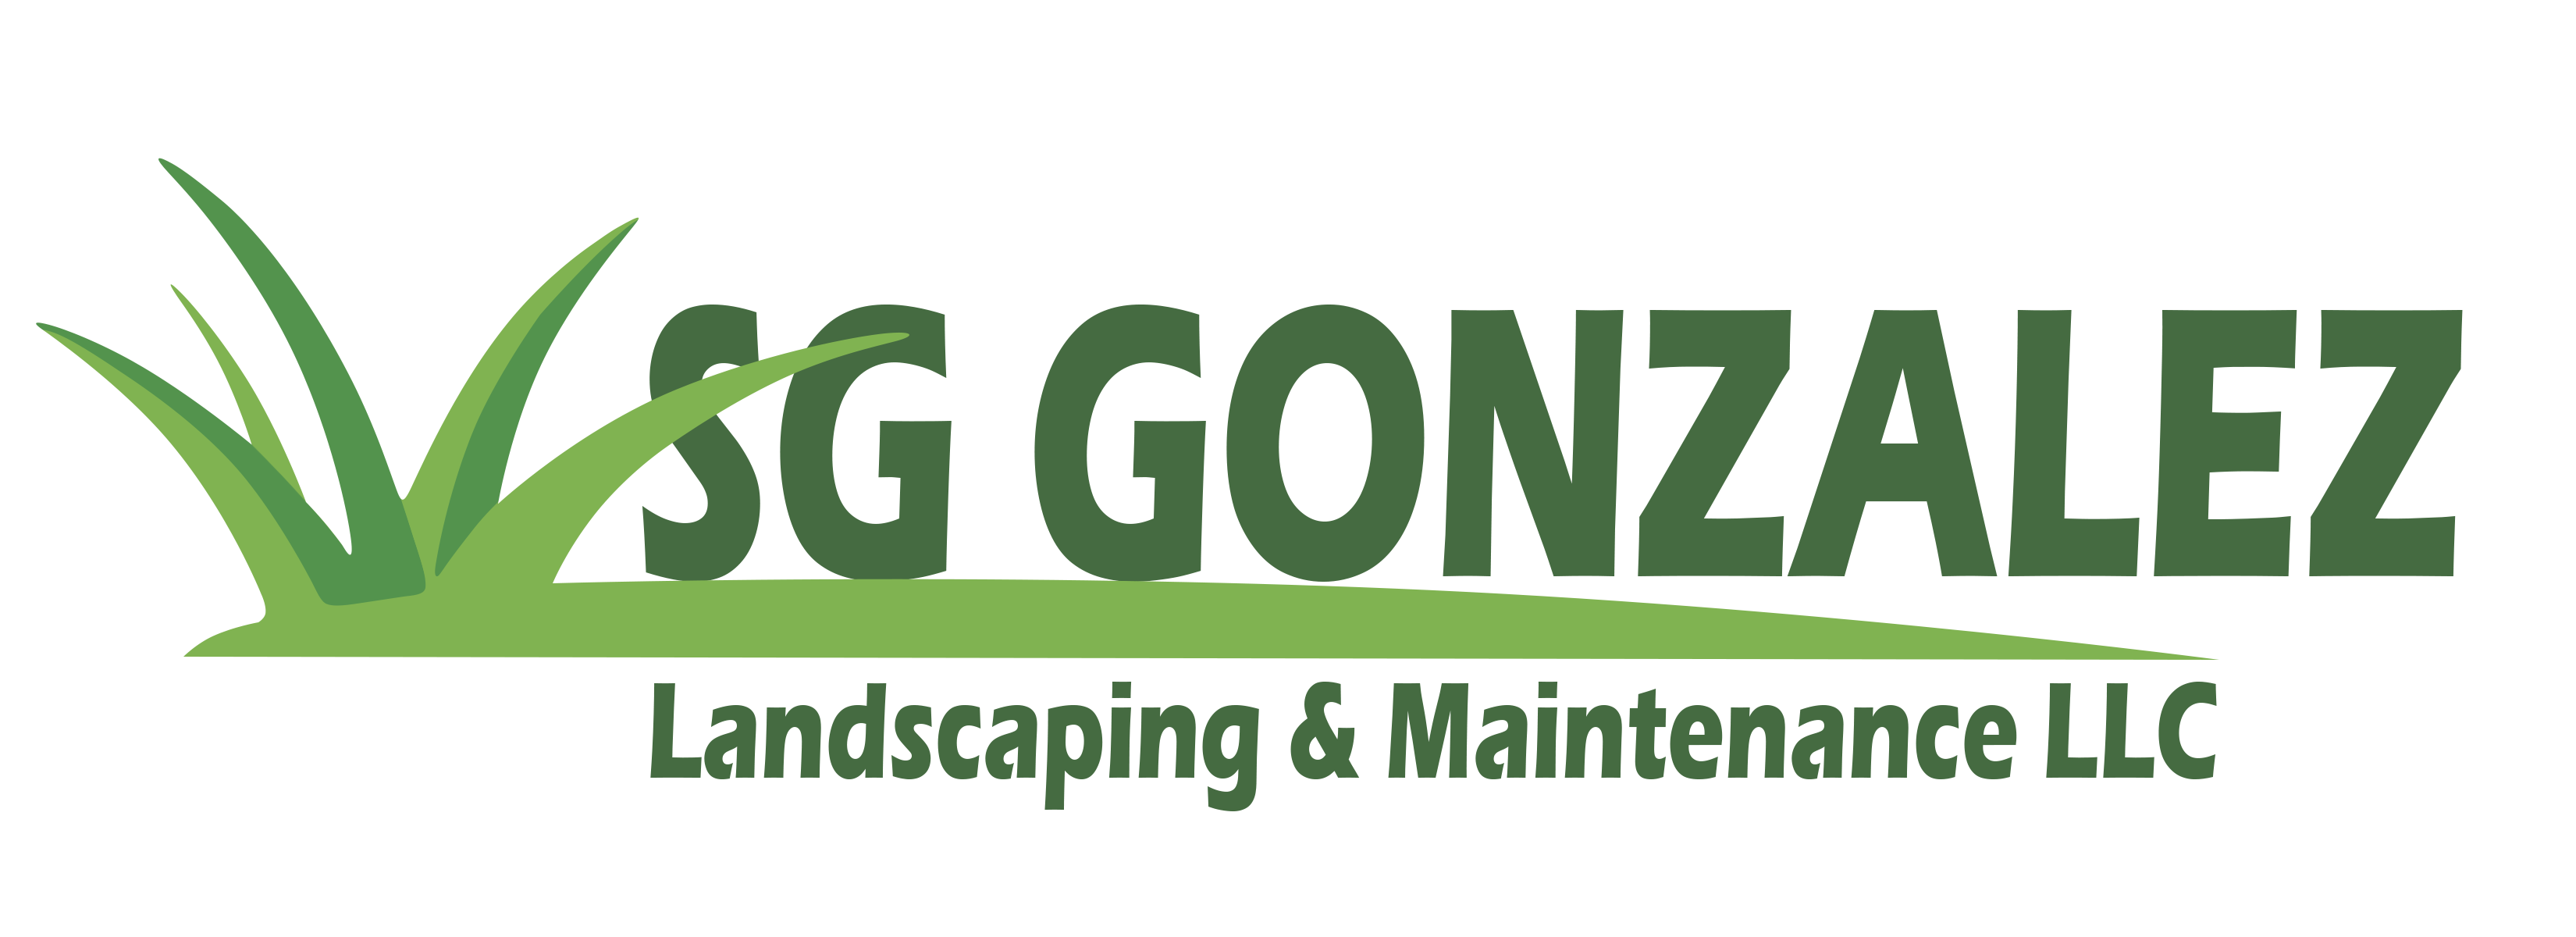 SG Gonzalez landscaping & maintenance LLC's Logo